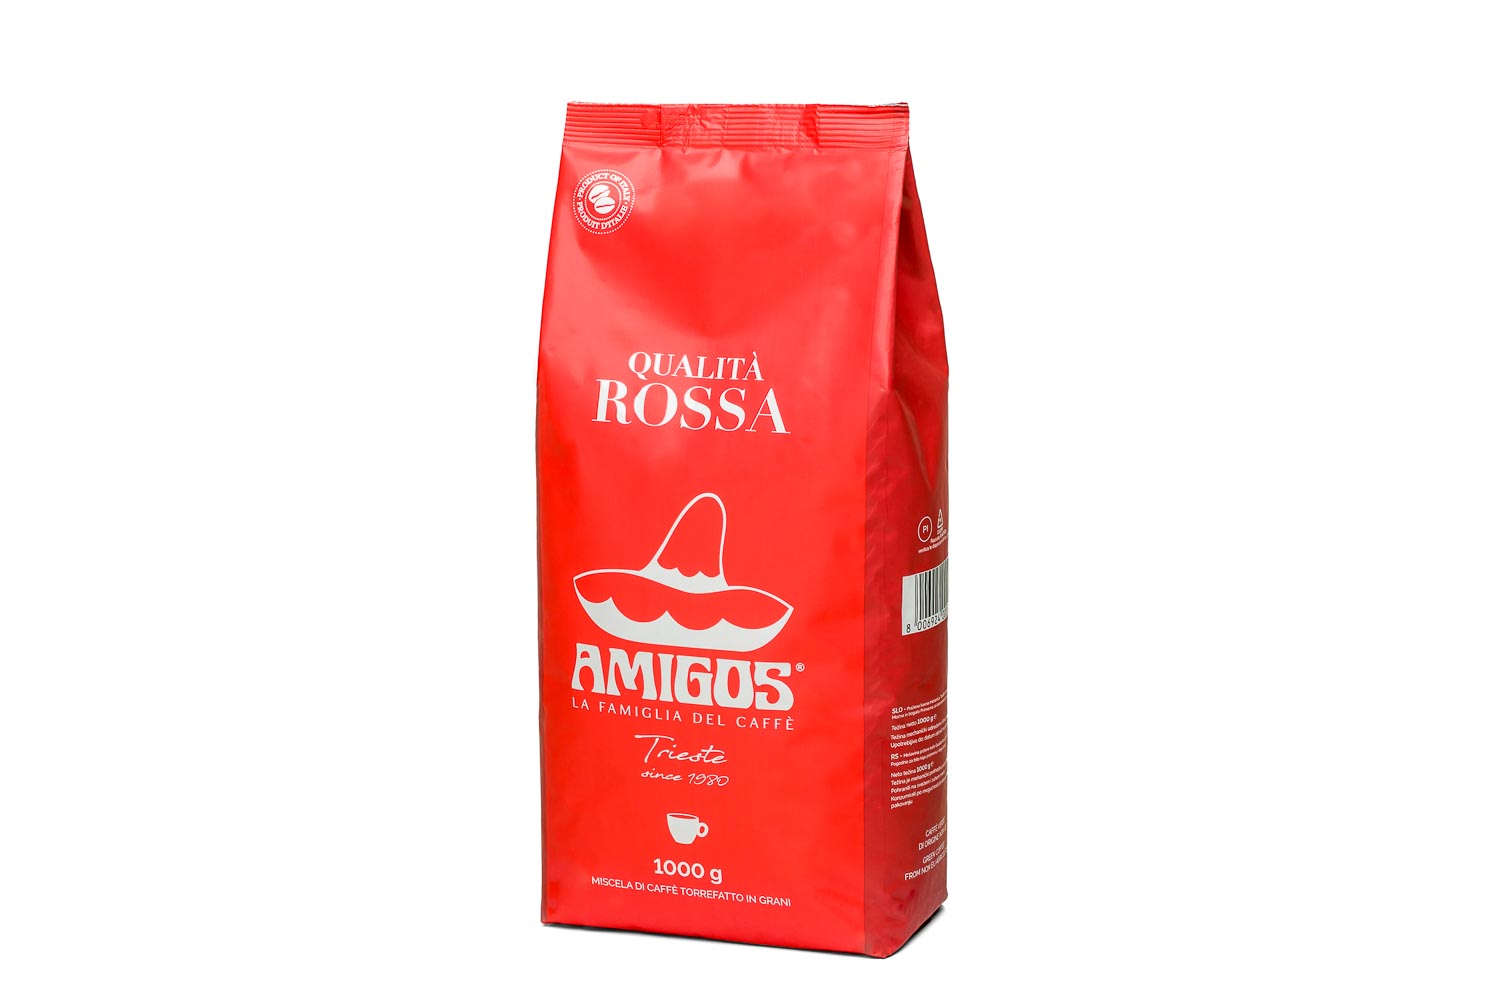 Qualità Rossa coffee beans